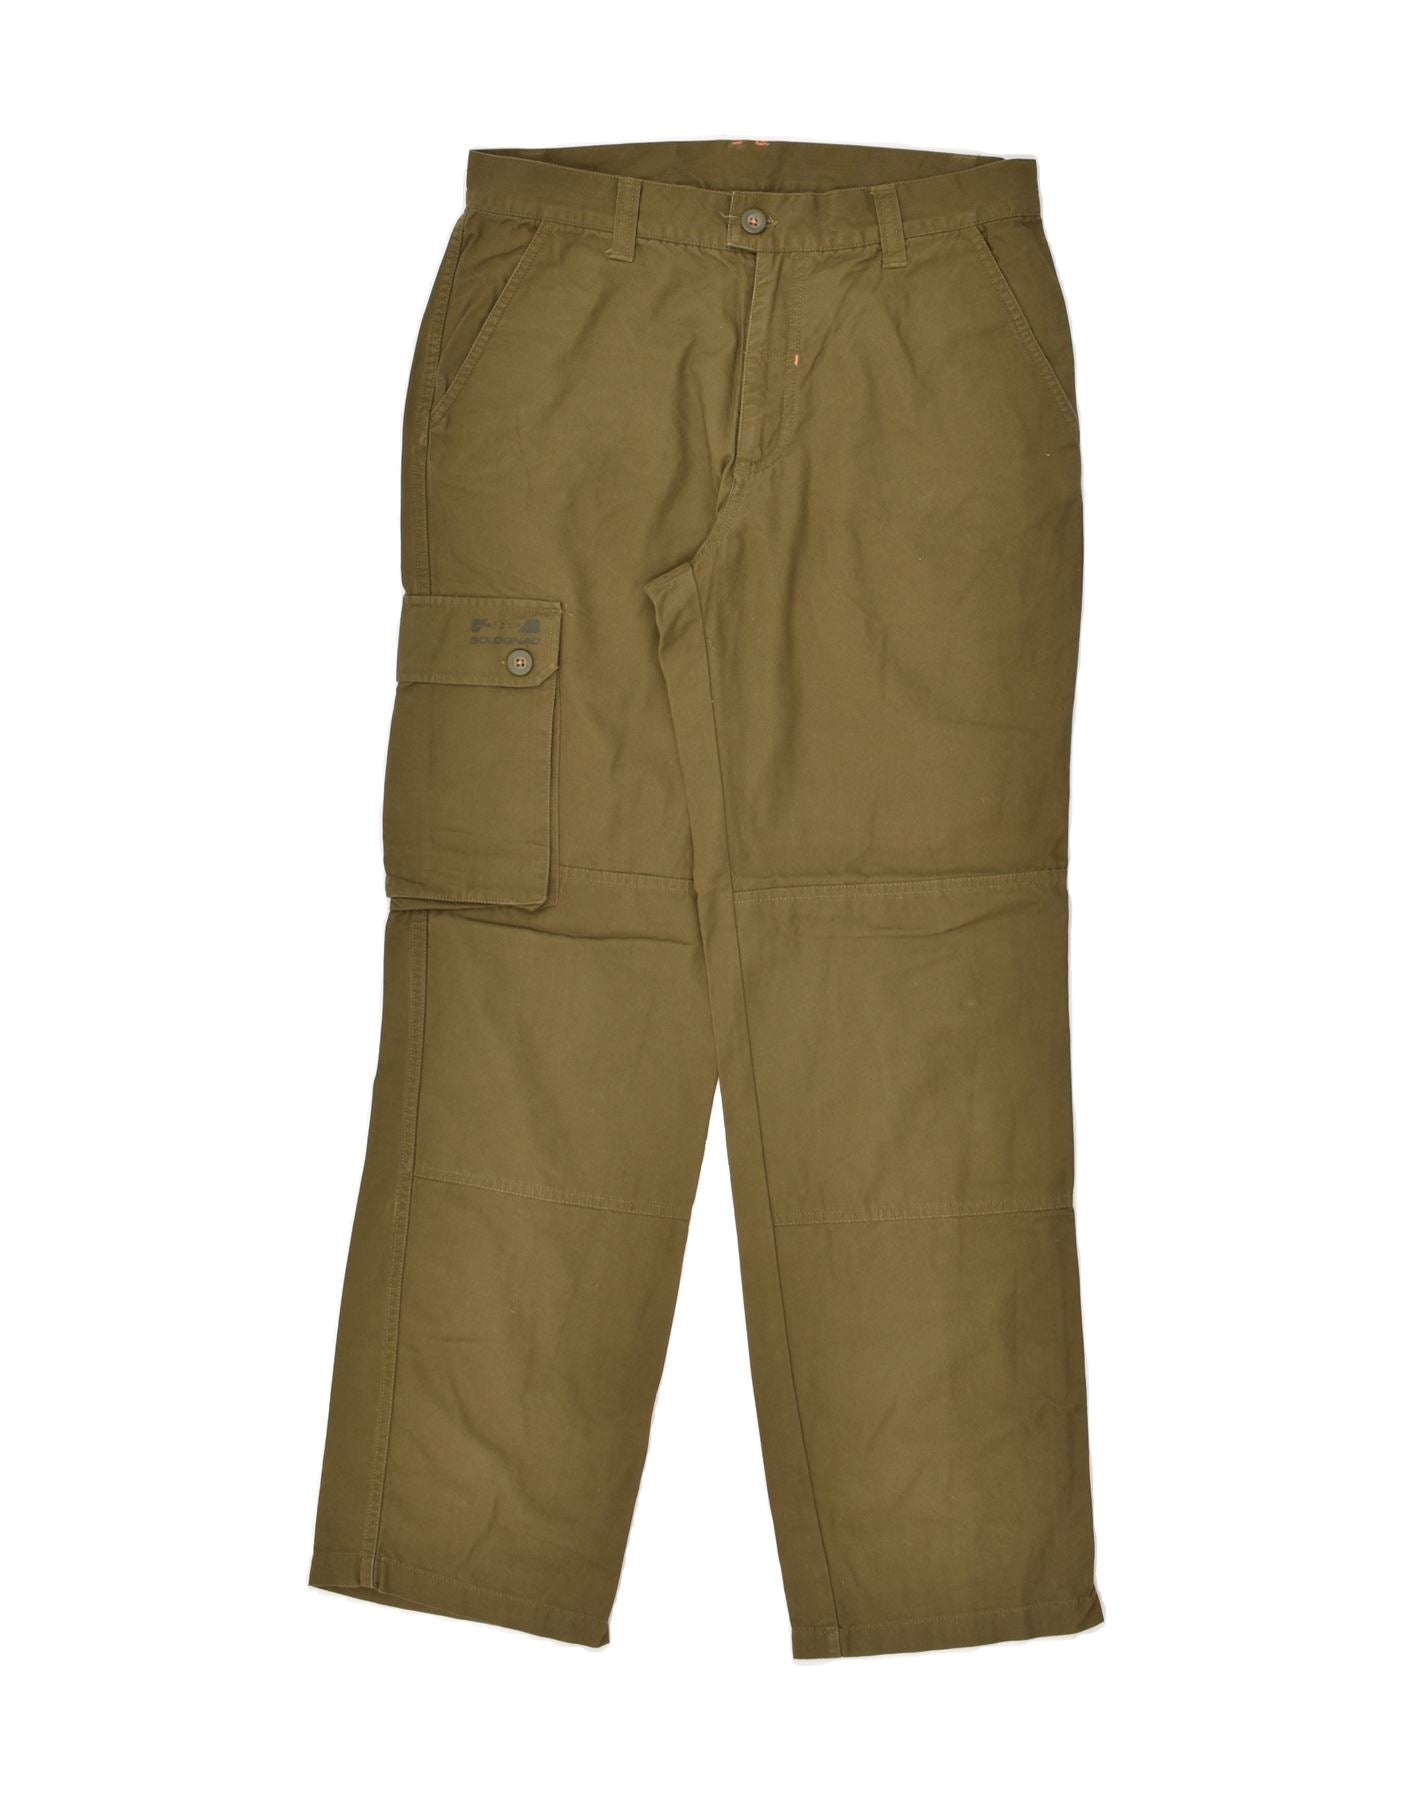 Buy Women's Regular Fit Hiking Pants Grey NH500 Online | Decathlon